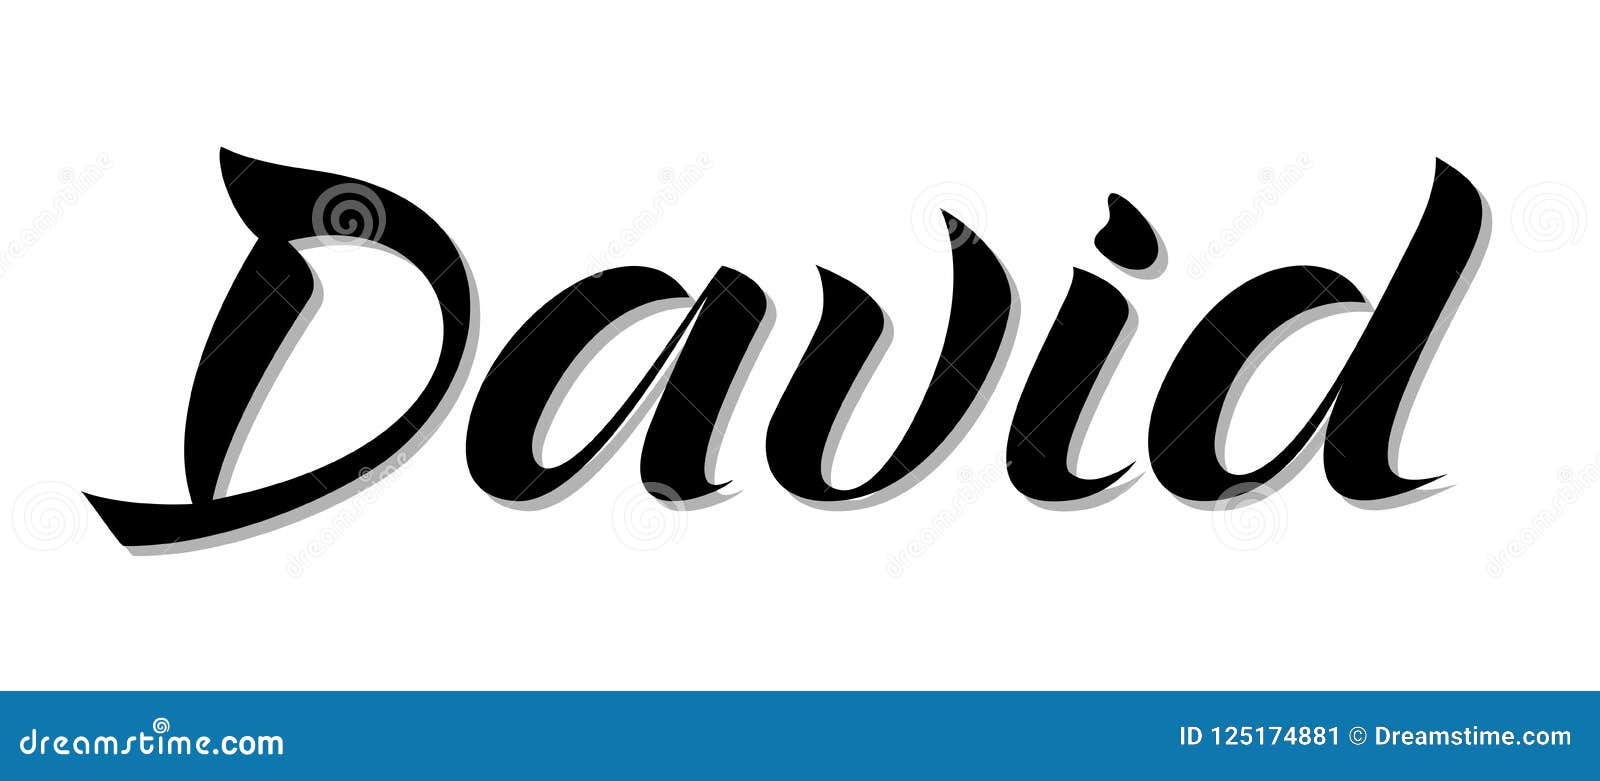 Details 143+ david logo - camera.edu.vn